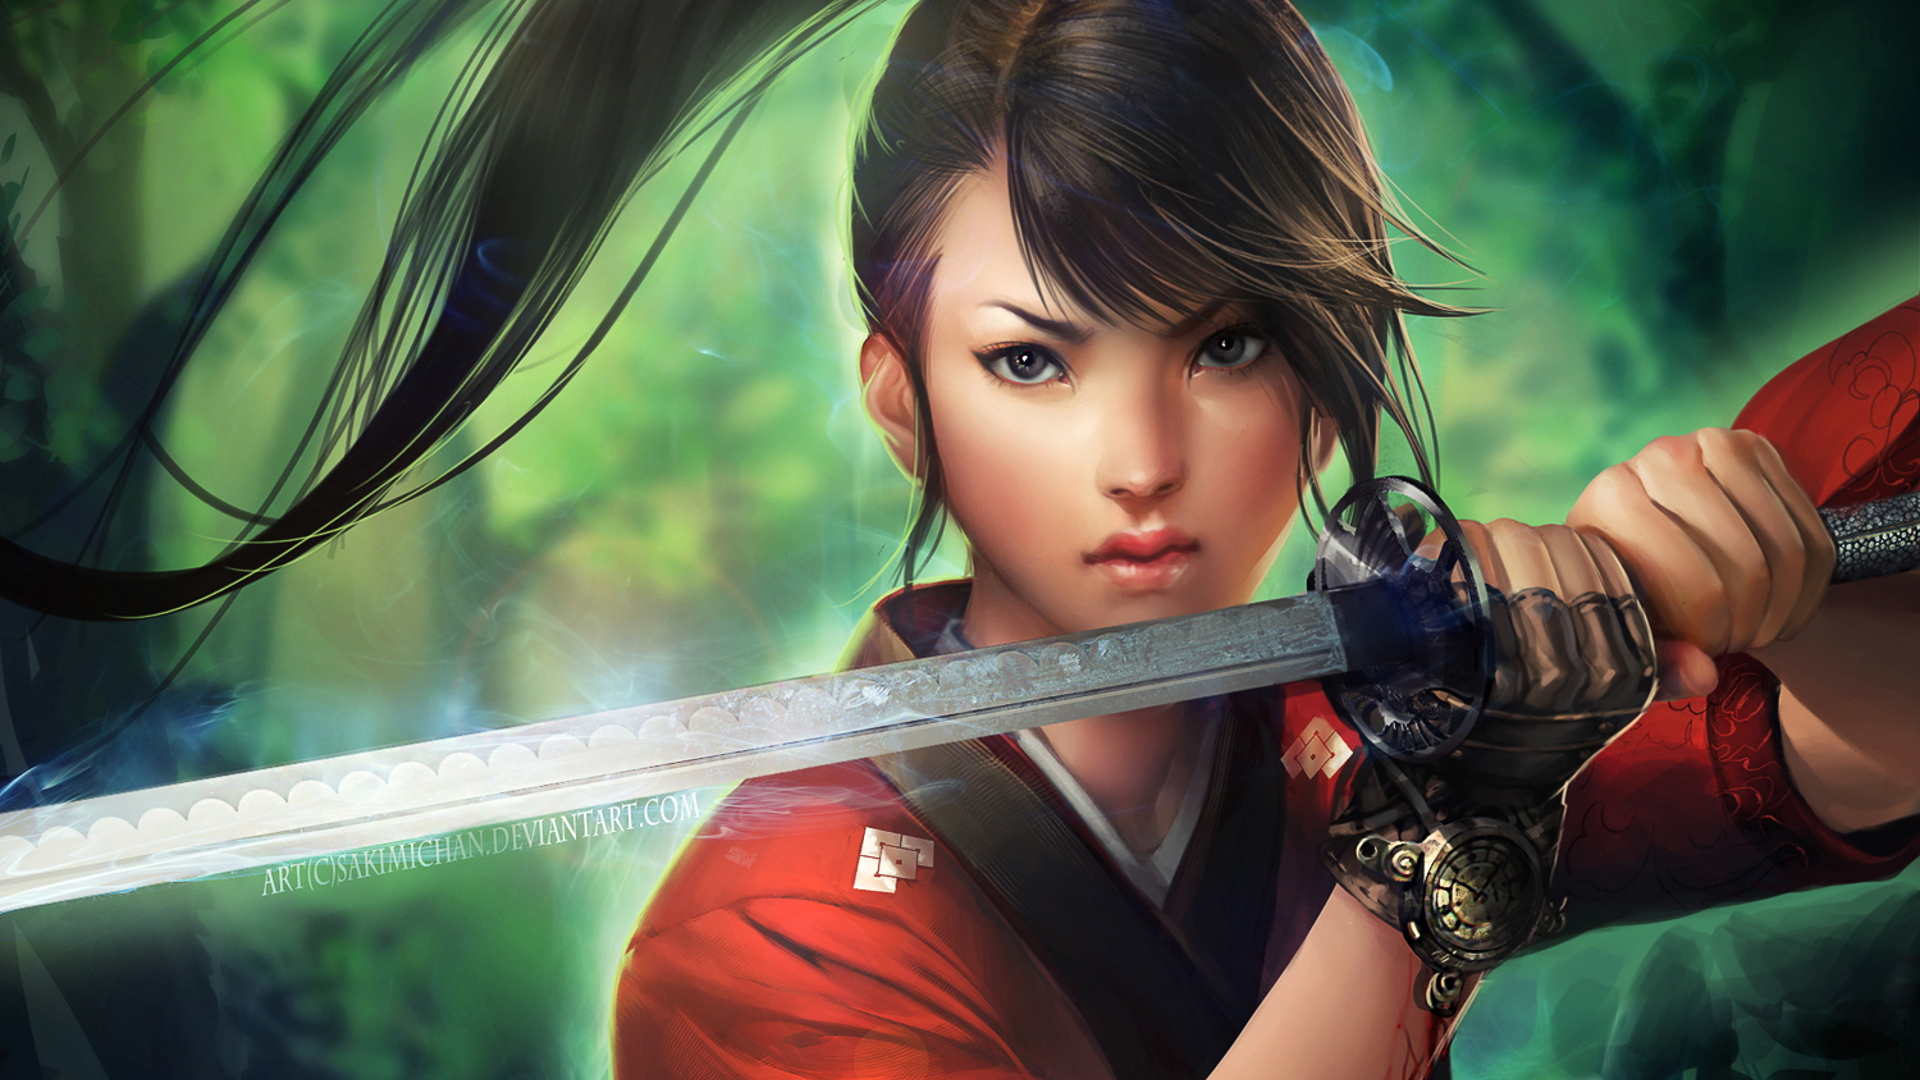 Download Sword Fantasy Women Warrior HD Wallpaper by Sakimichan